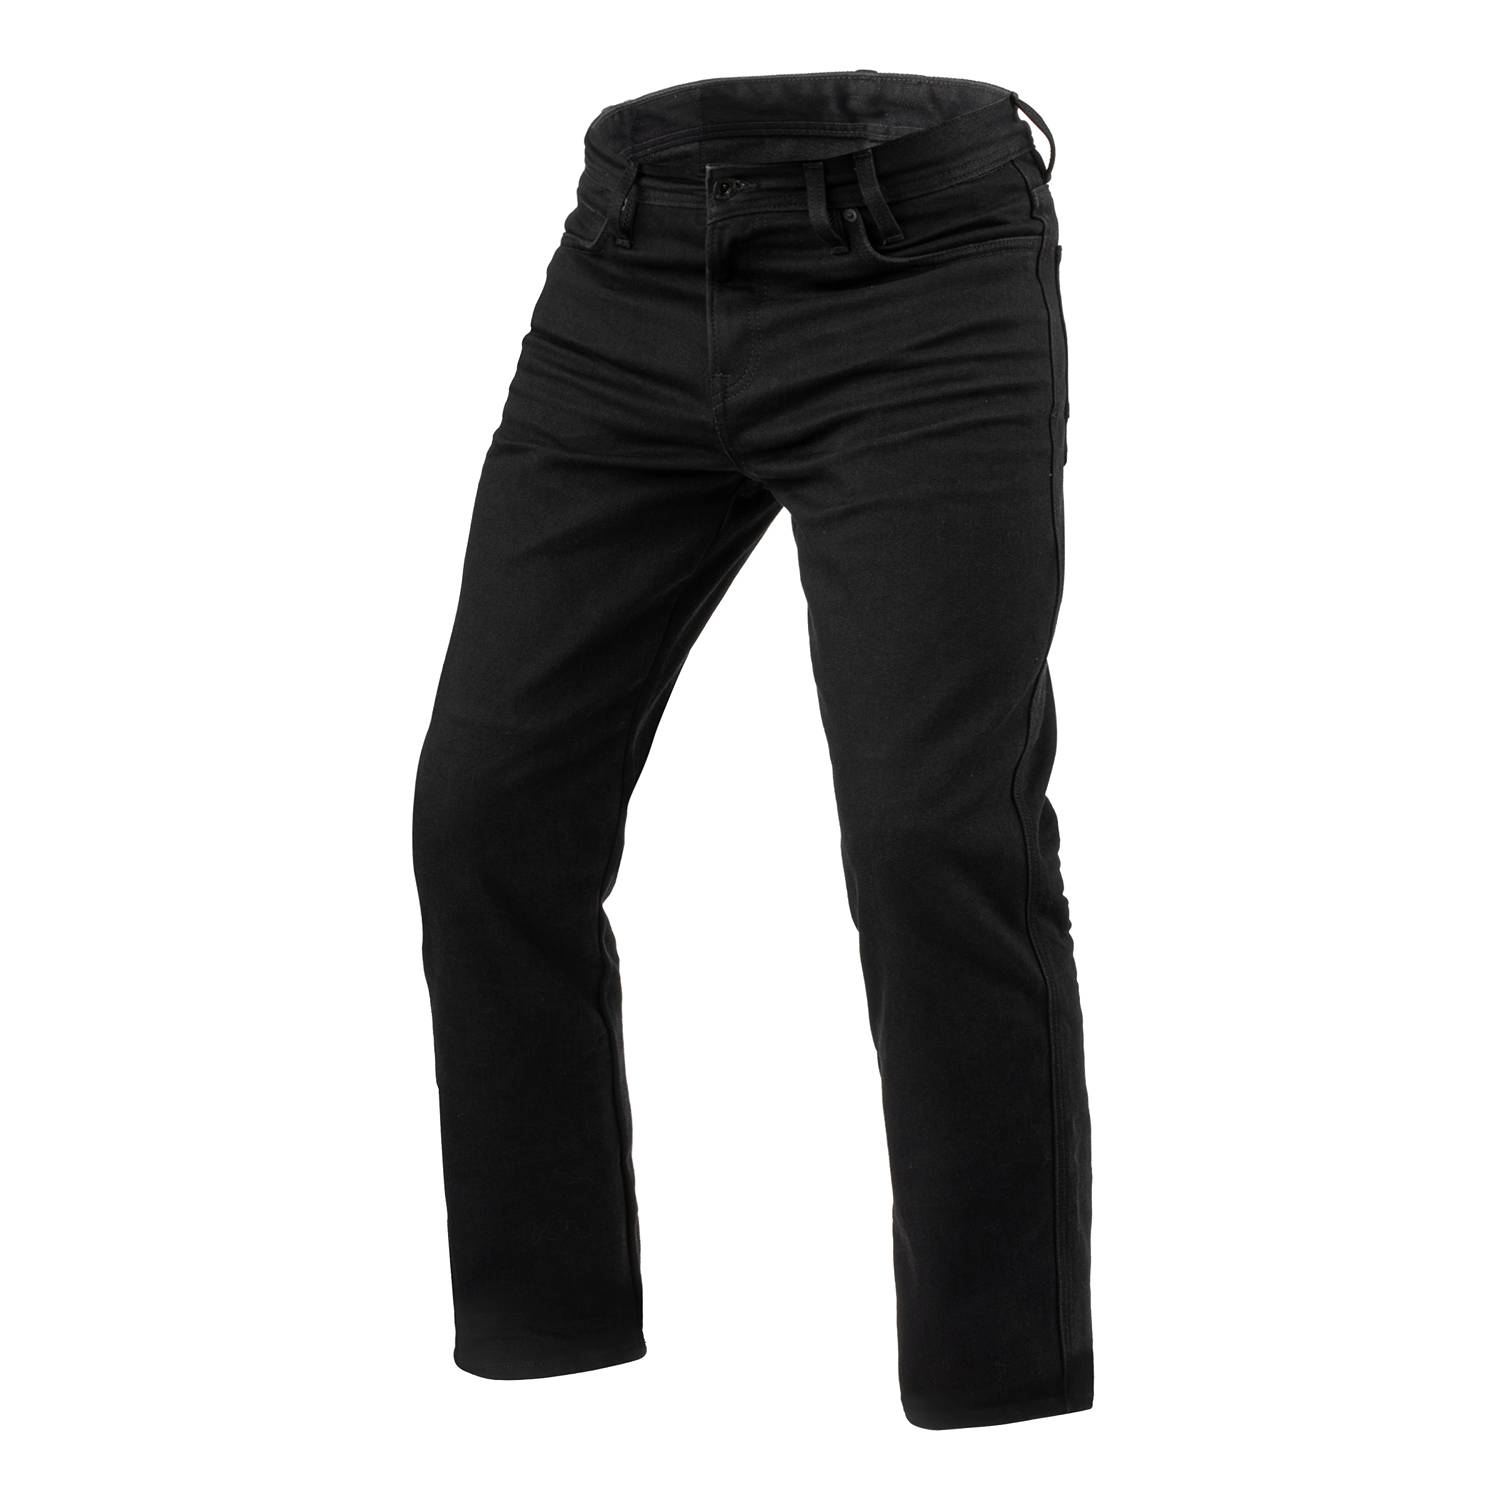 Image of REV'IT! Jeans Lombard 3 RF Black L34 Motorcycle Jeans Talla L34/W31